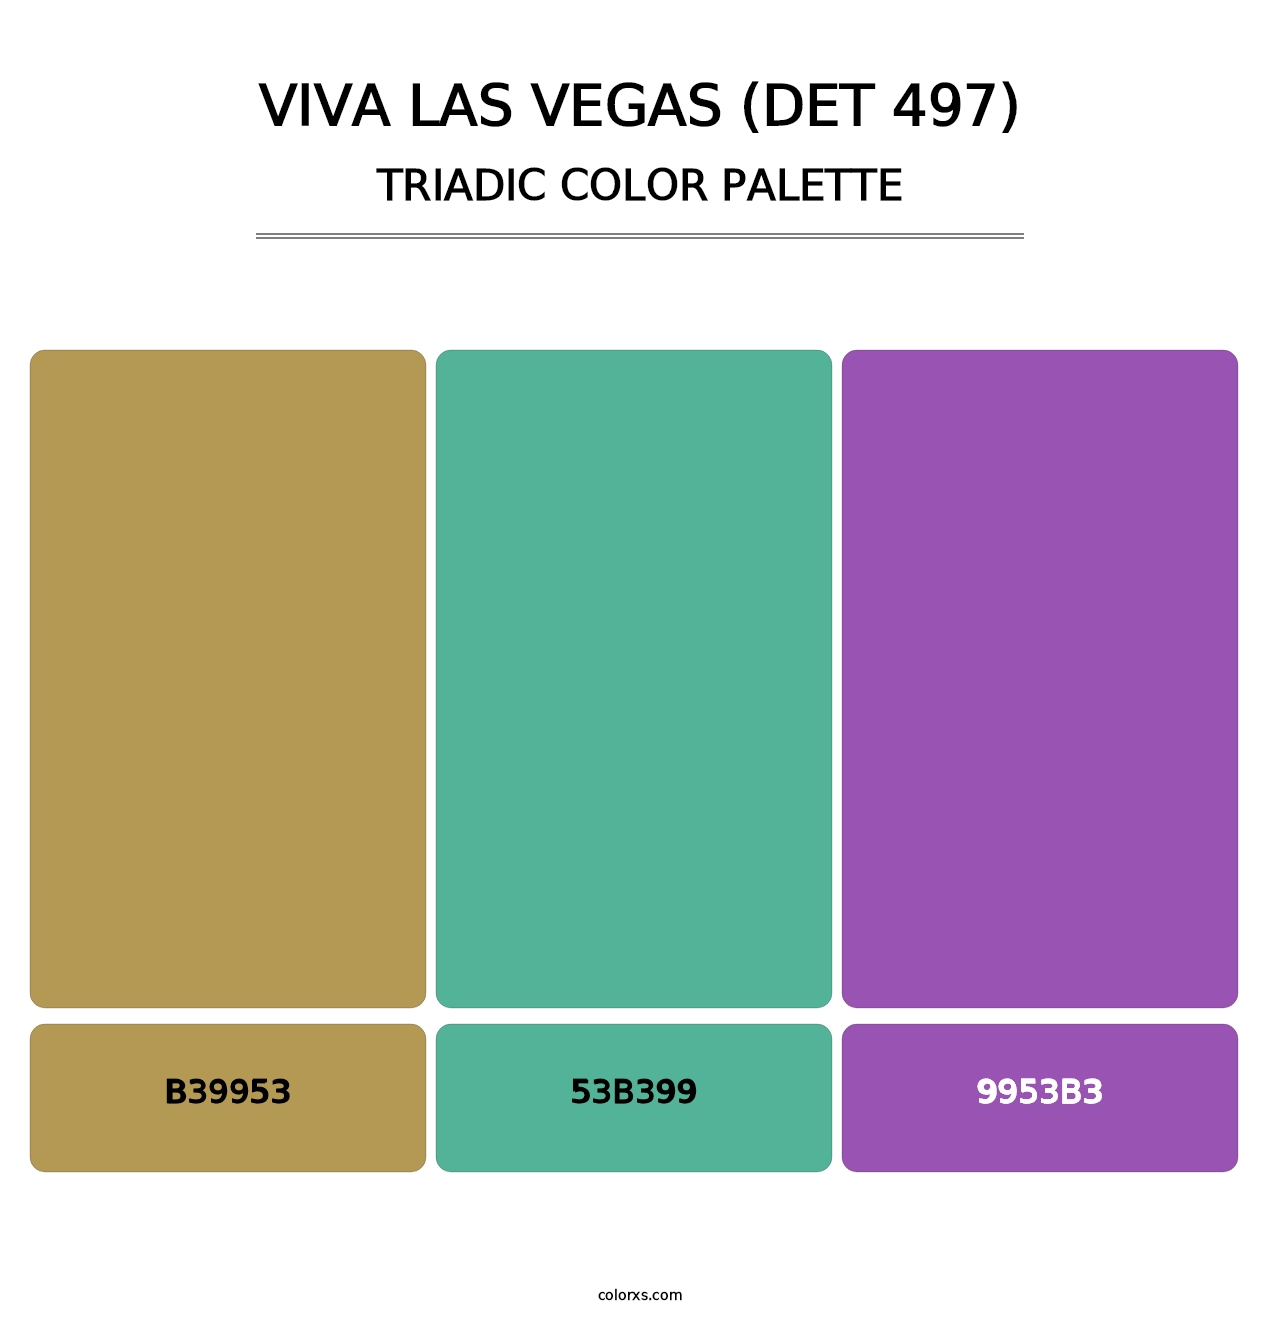 Viva Las Vegas (DET 497) - Triadic Color Palette